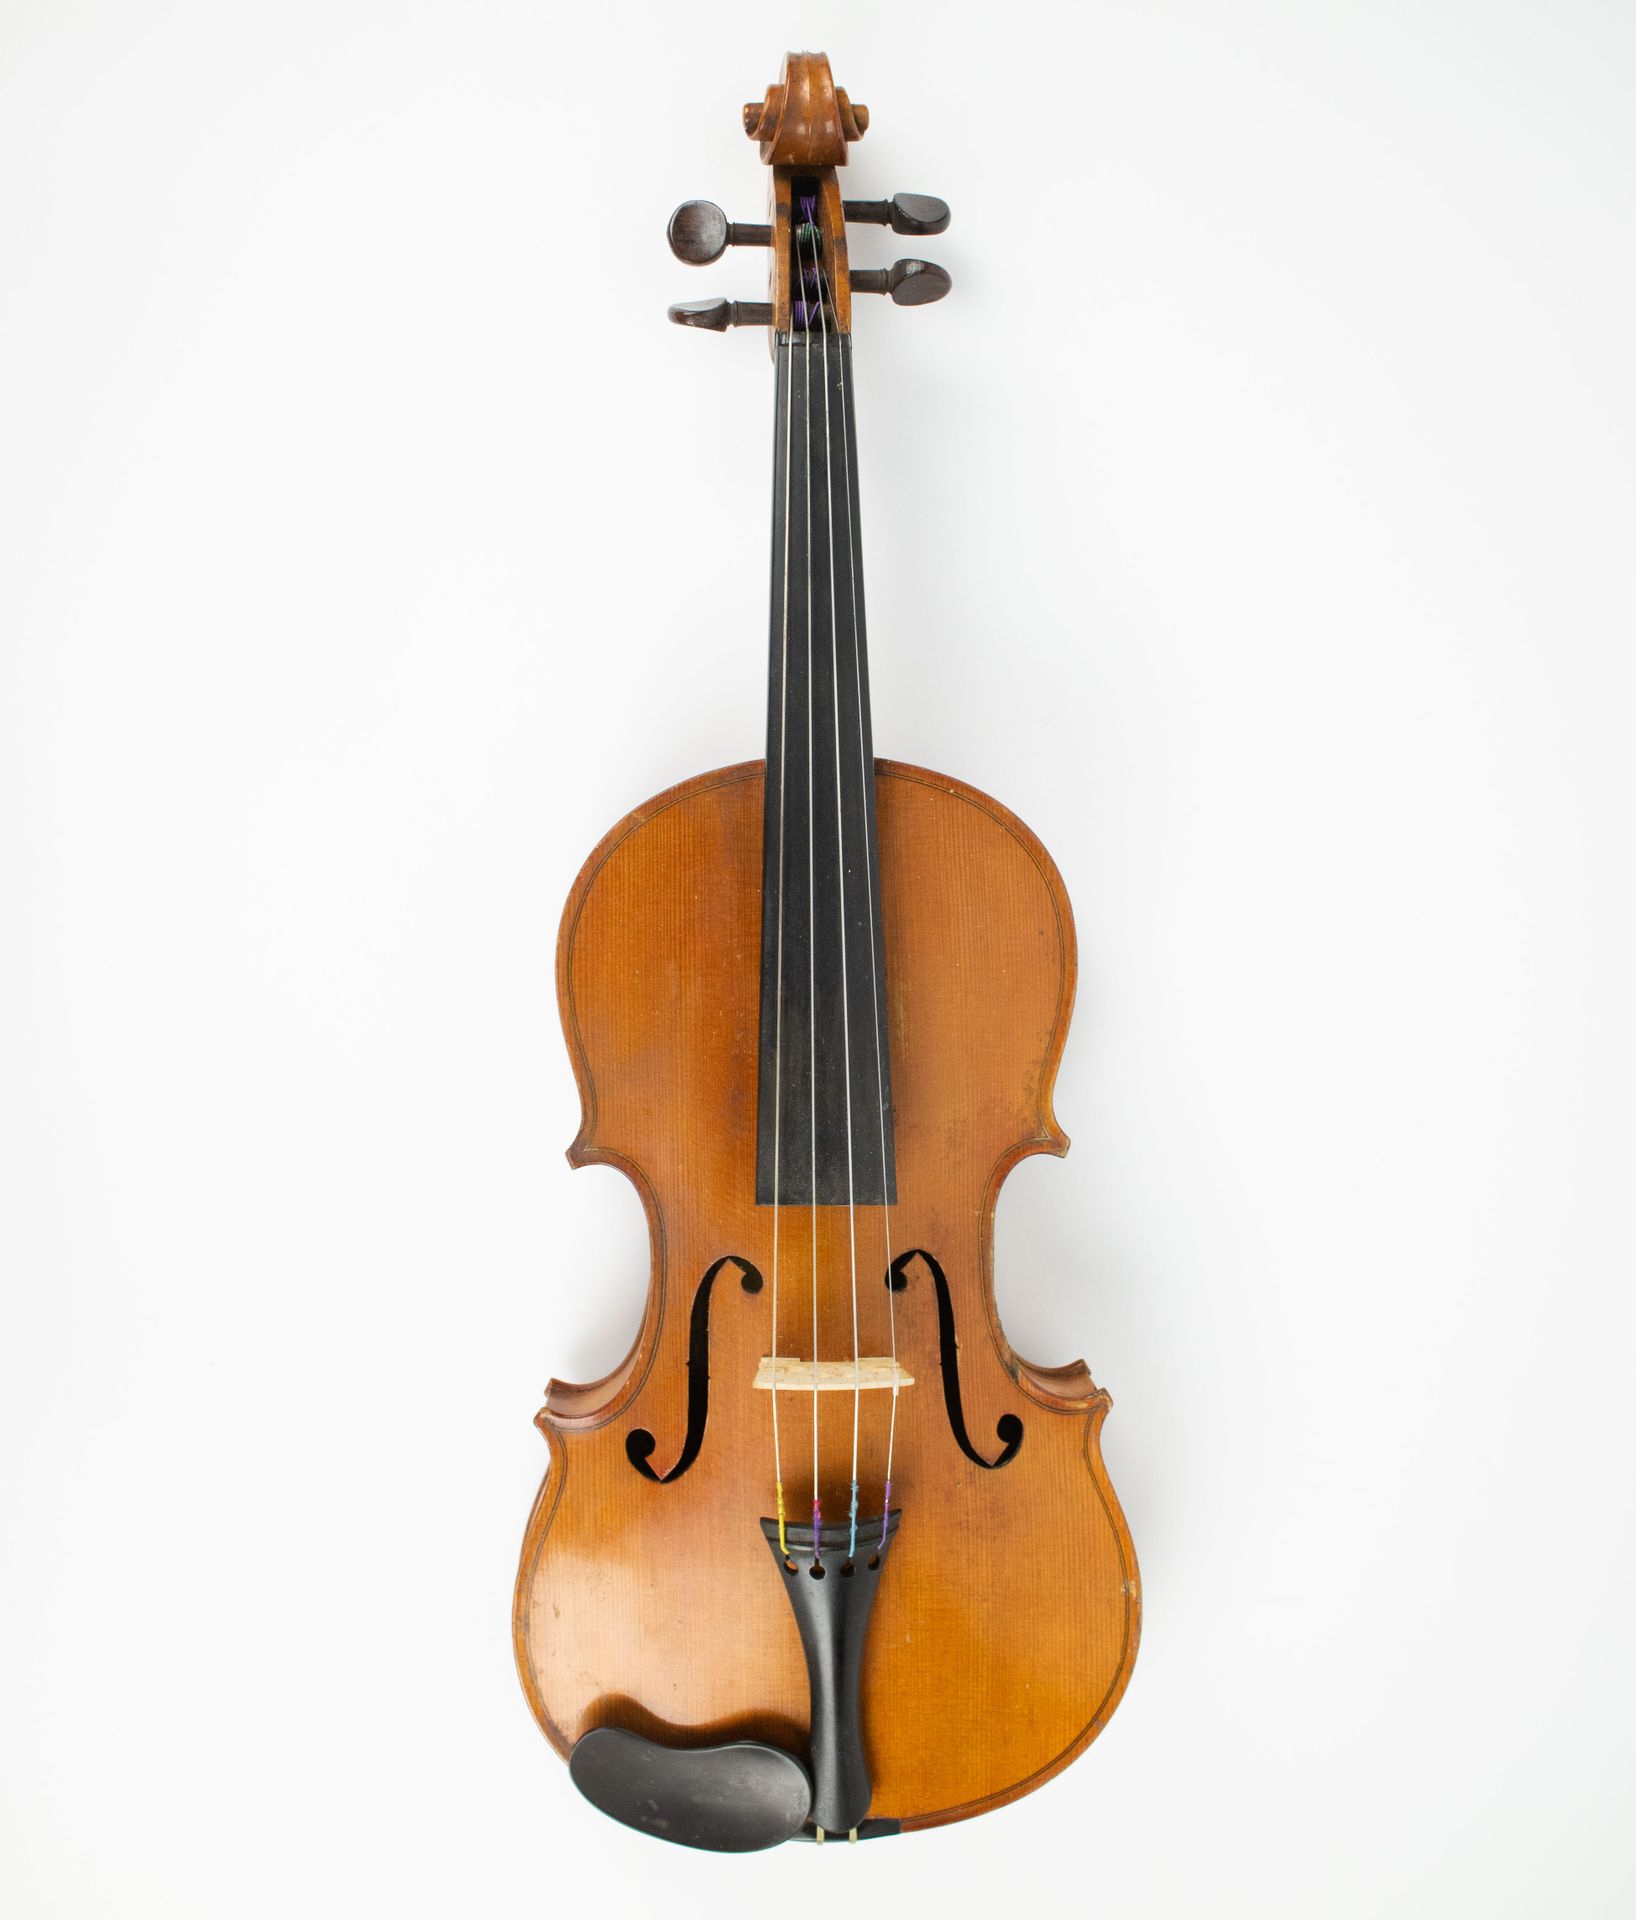 Violin 4/4 Viool 4/4.
L 58 cm